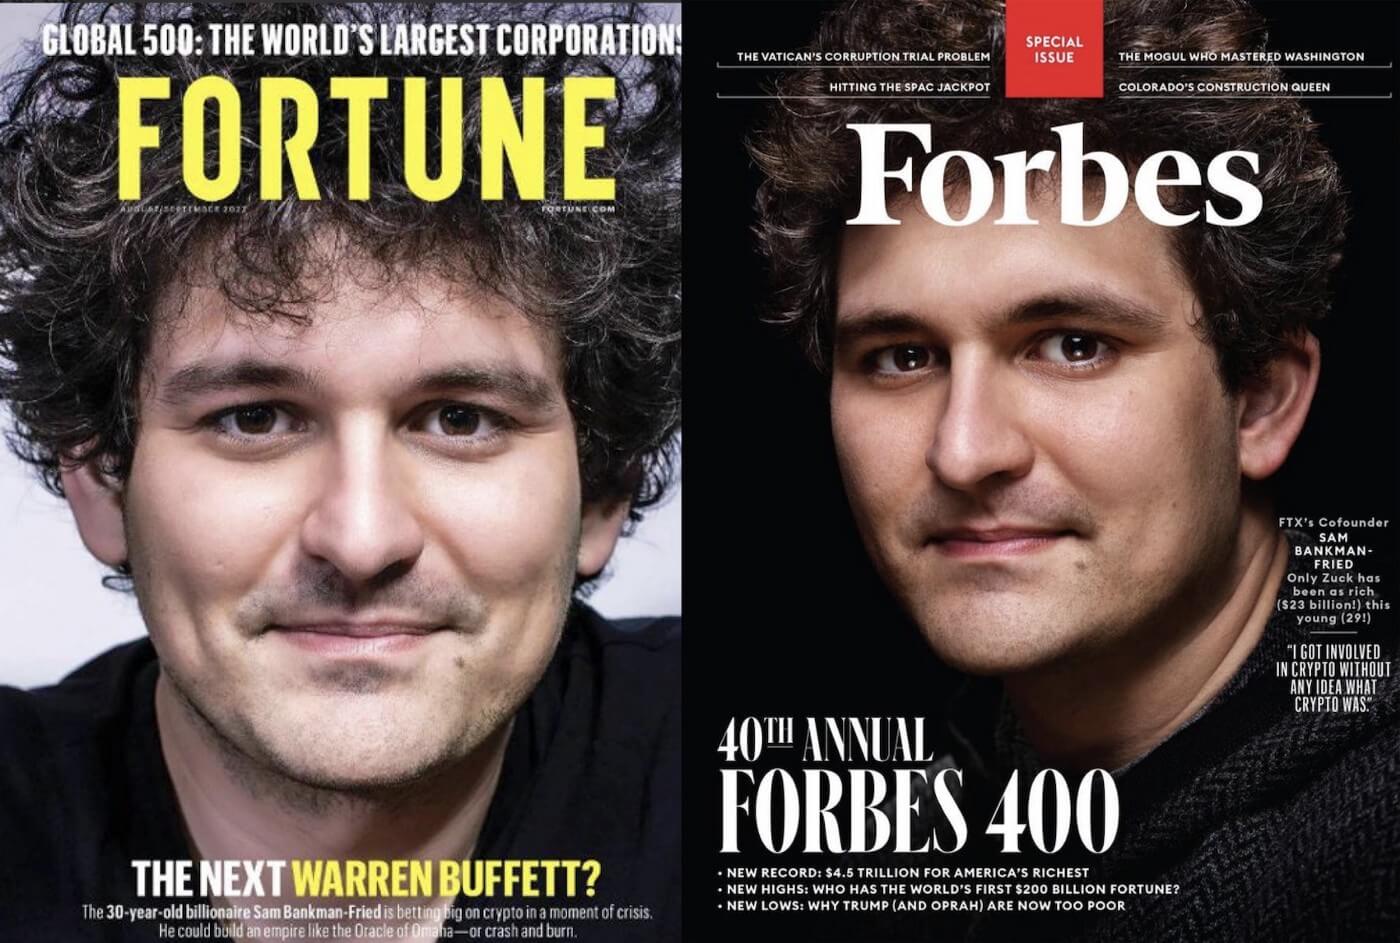 Как Сэм Банкман-Фрид навредил миру криптовалют. Банкман-Фрид на обложке Forbes. Фото.